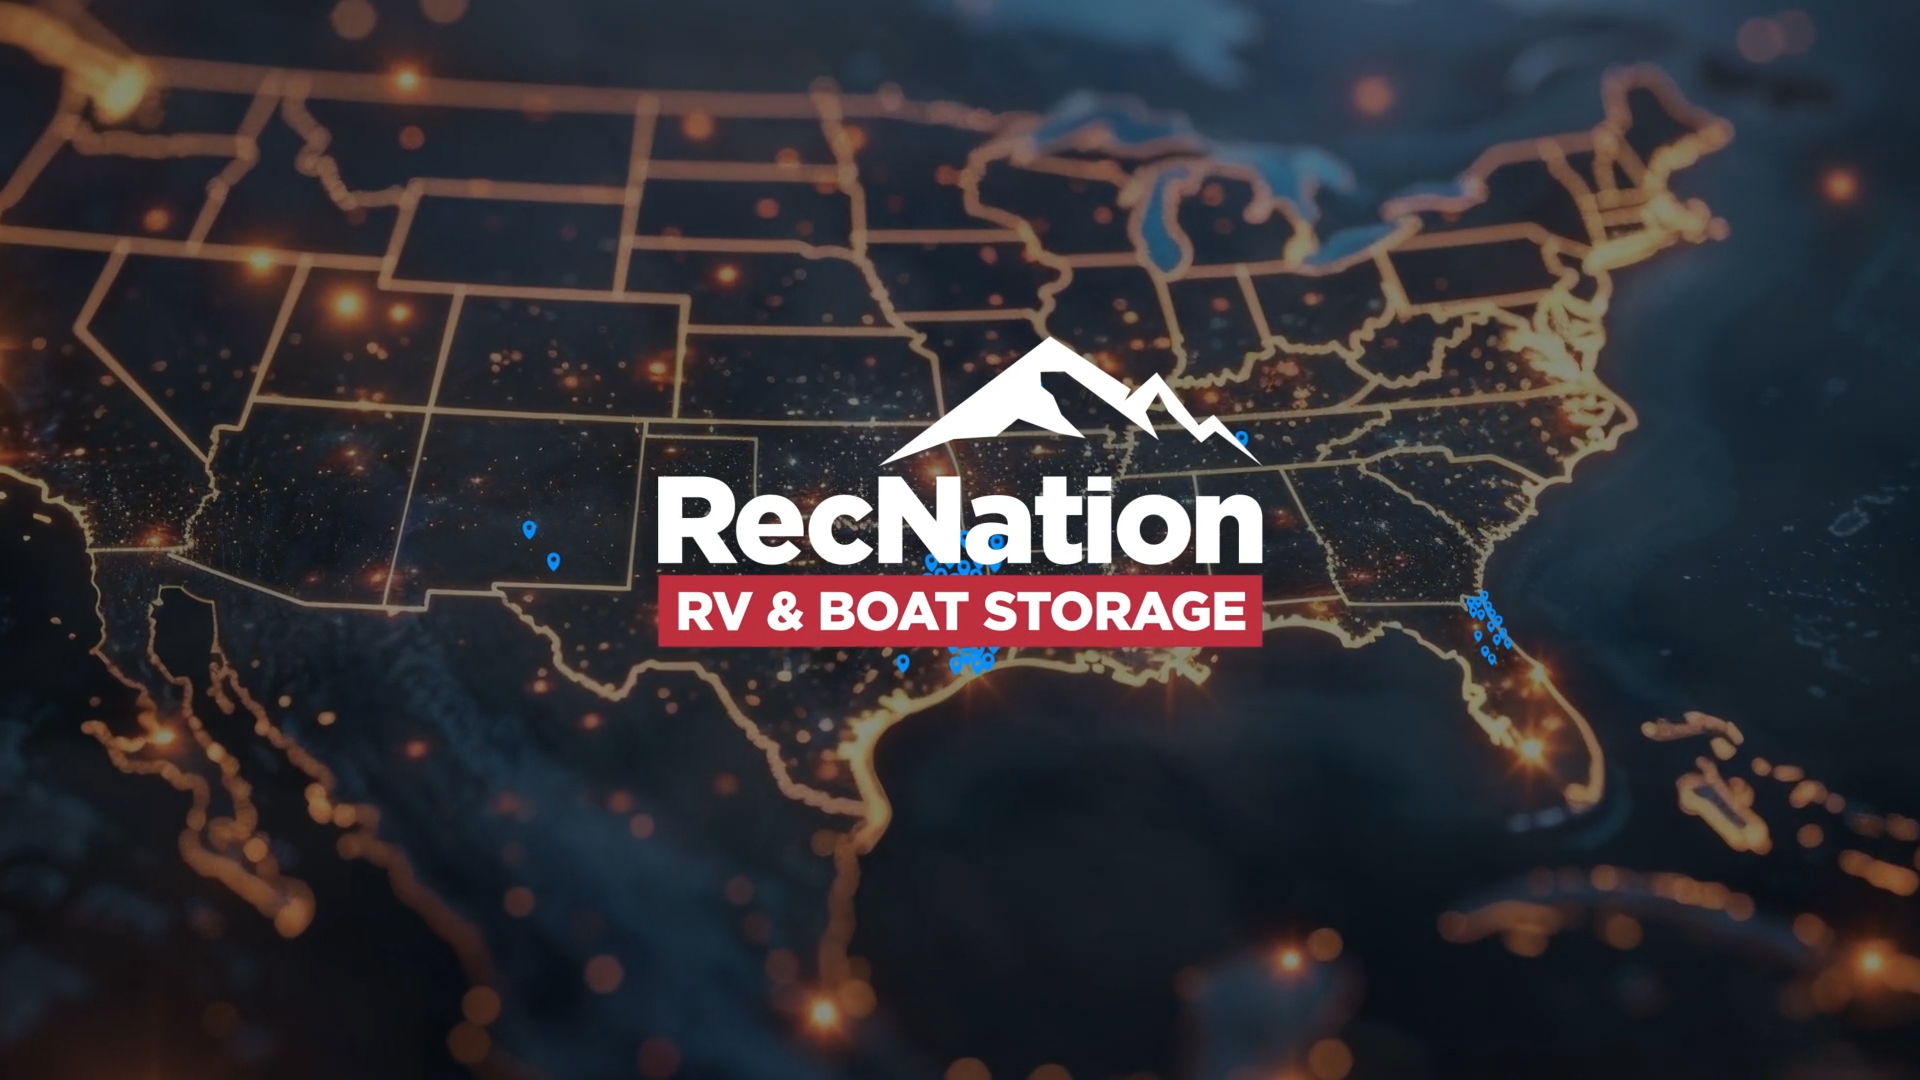 RecNation RV & Boat Storage Expands into South Carolina